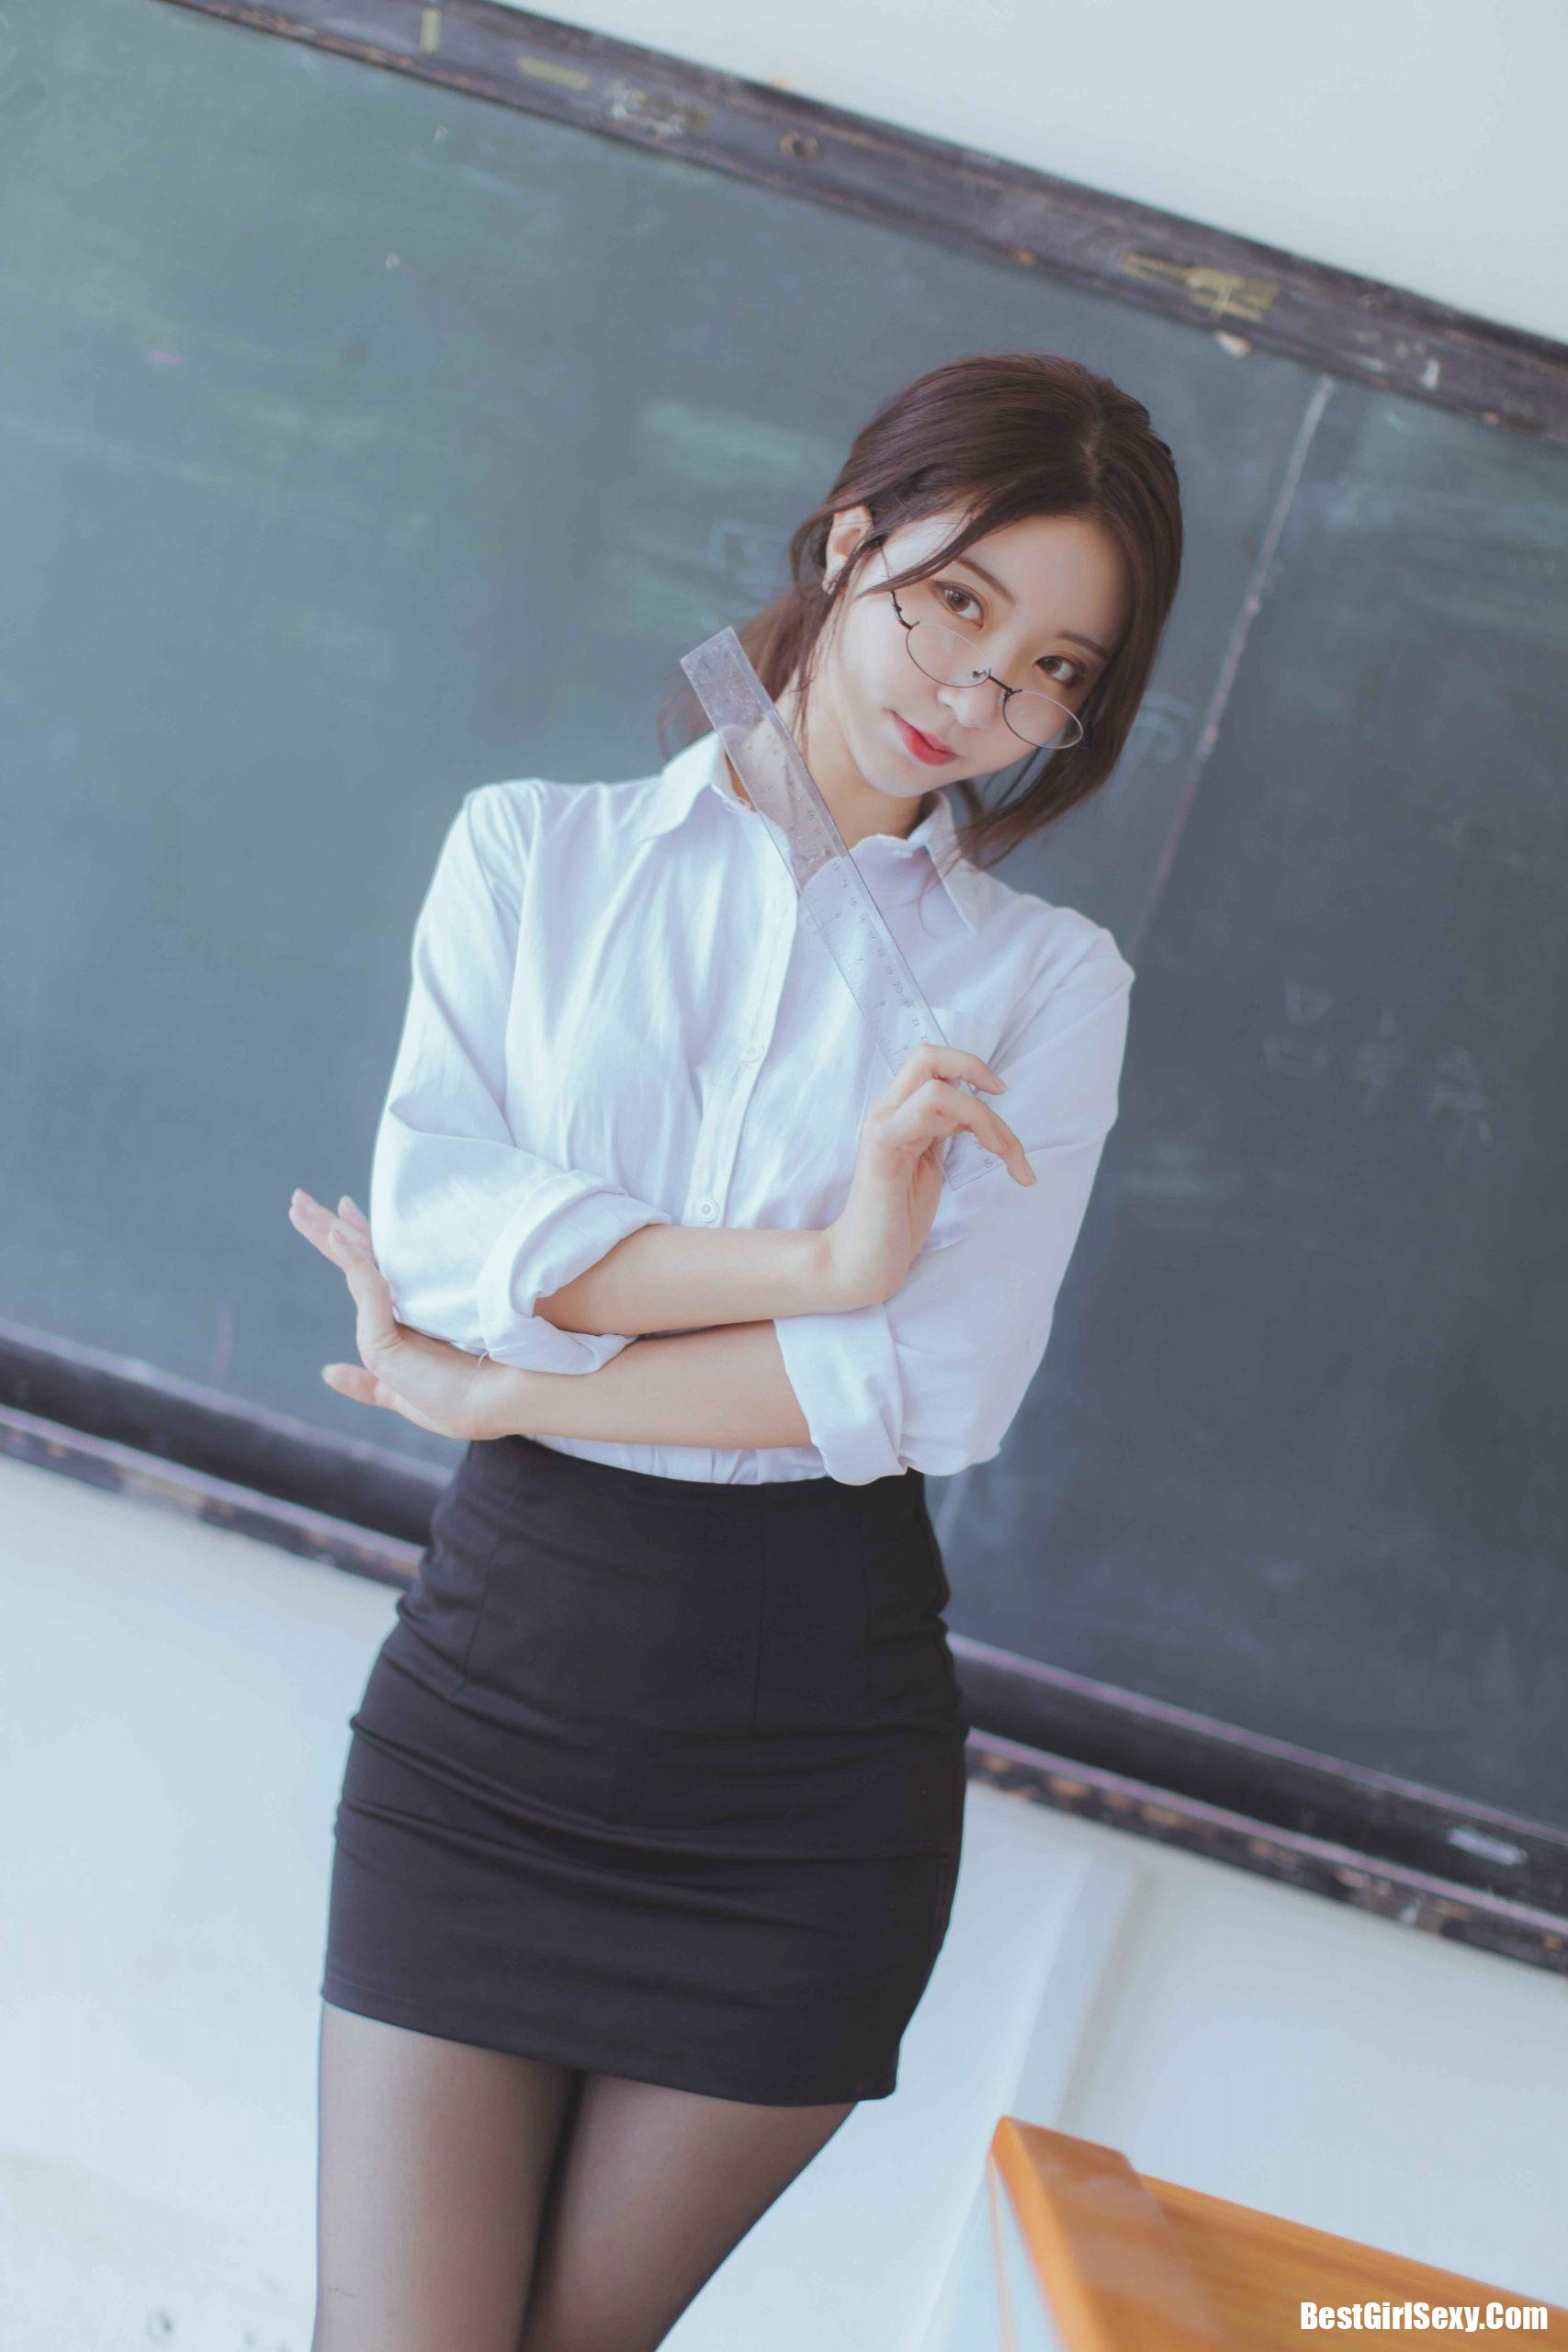 Kurokawa NO Teacher BestGirlSexy